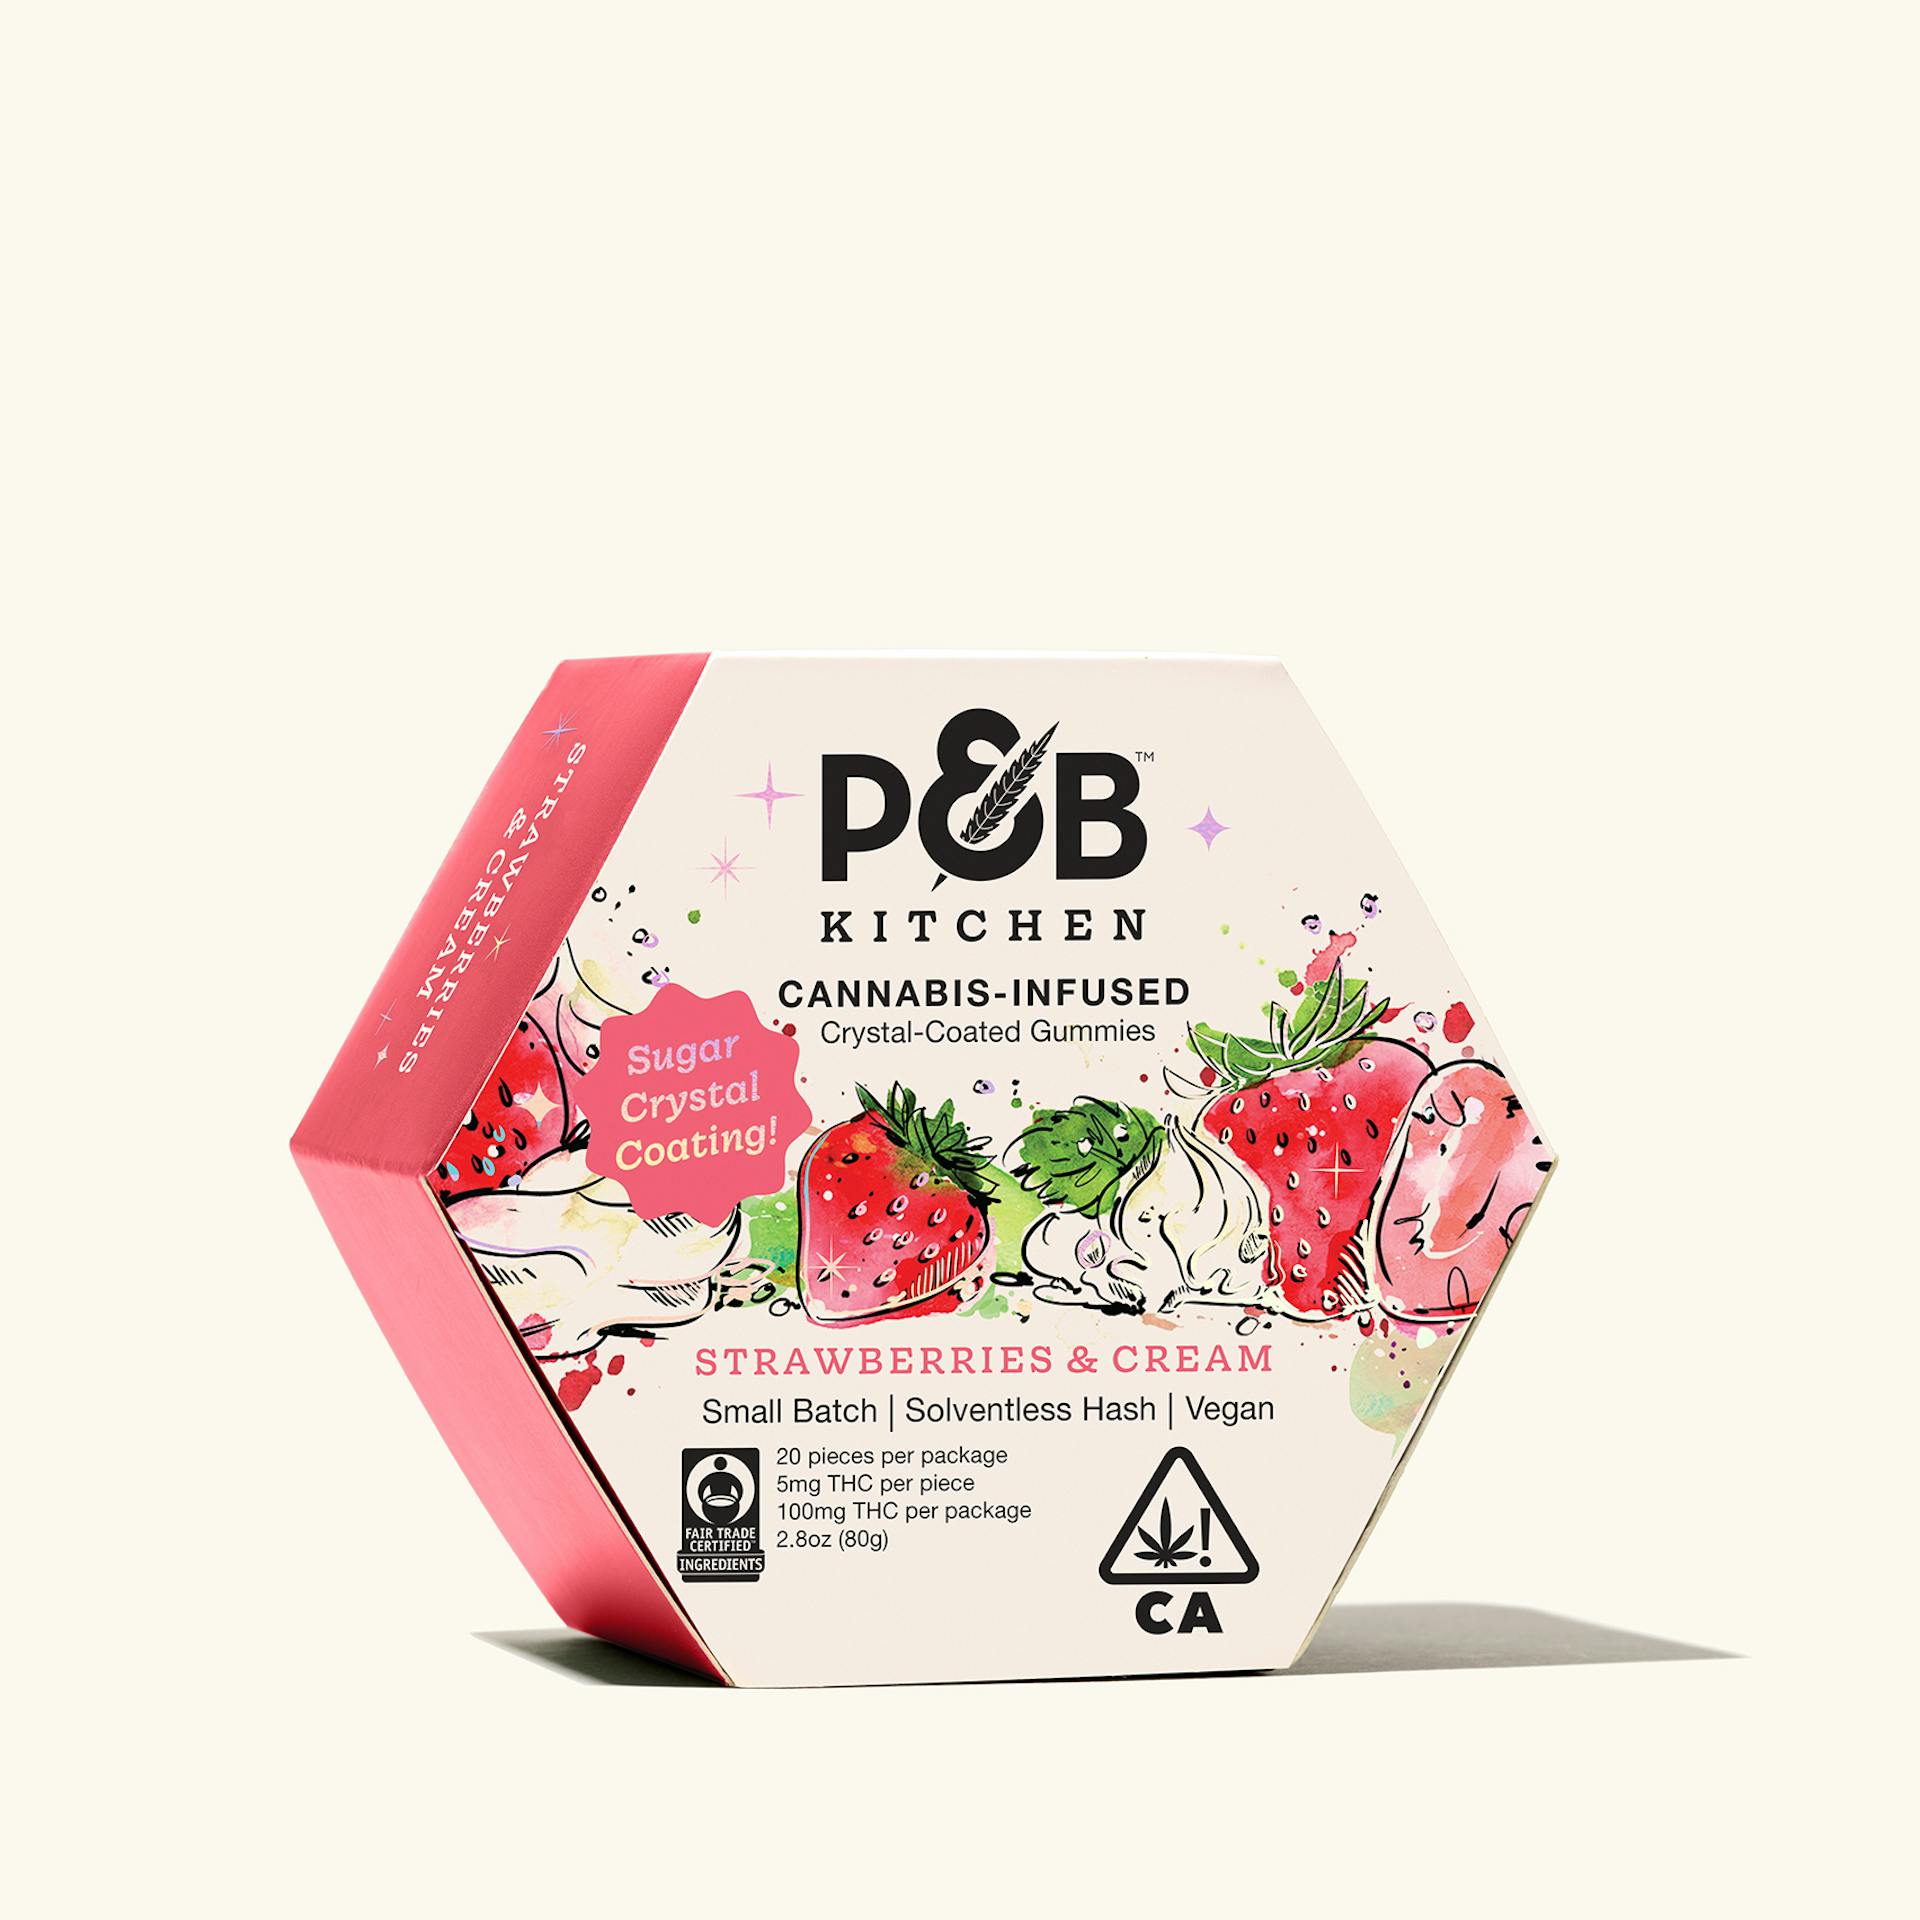 PB Kitchen CC Strawberries Cream Gummies Box Product Image Cream 01